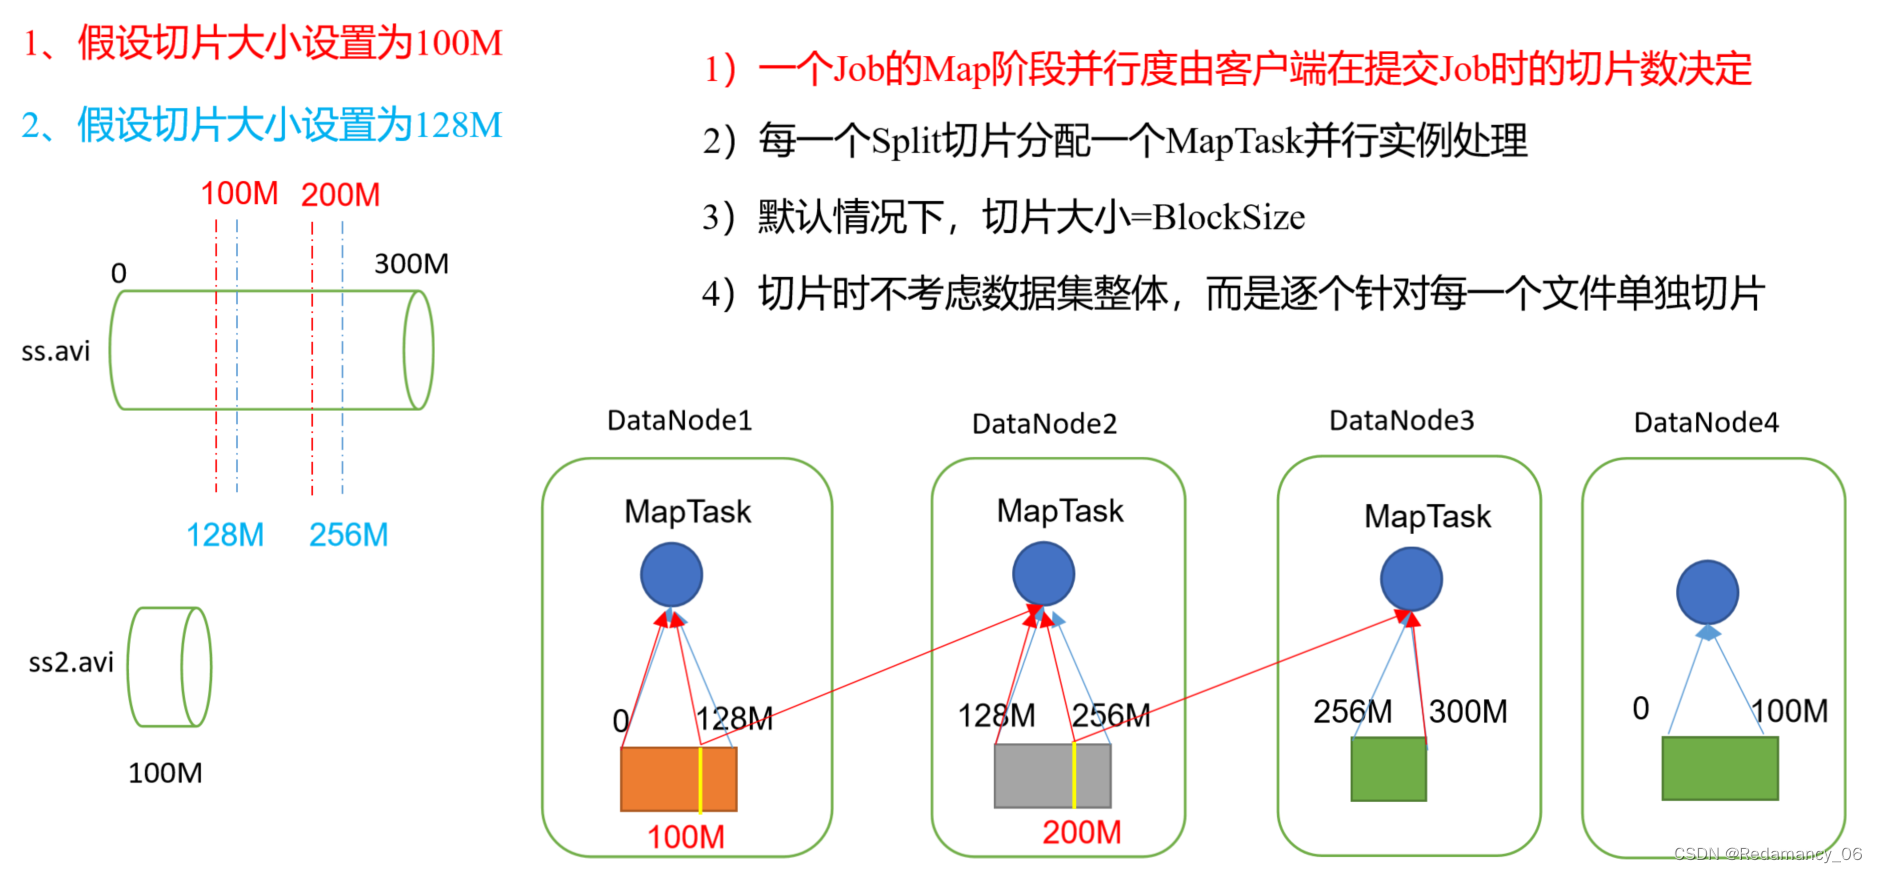 Hadoop中的MapReduce框架原理、Job提交流程源码断点在哪断并且介绍相关源码、切片与MapTask并行度决定机制、MapTask并行度决定机制